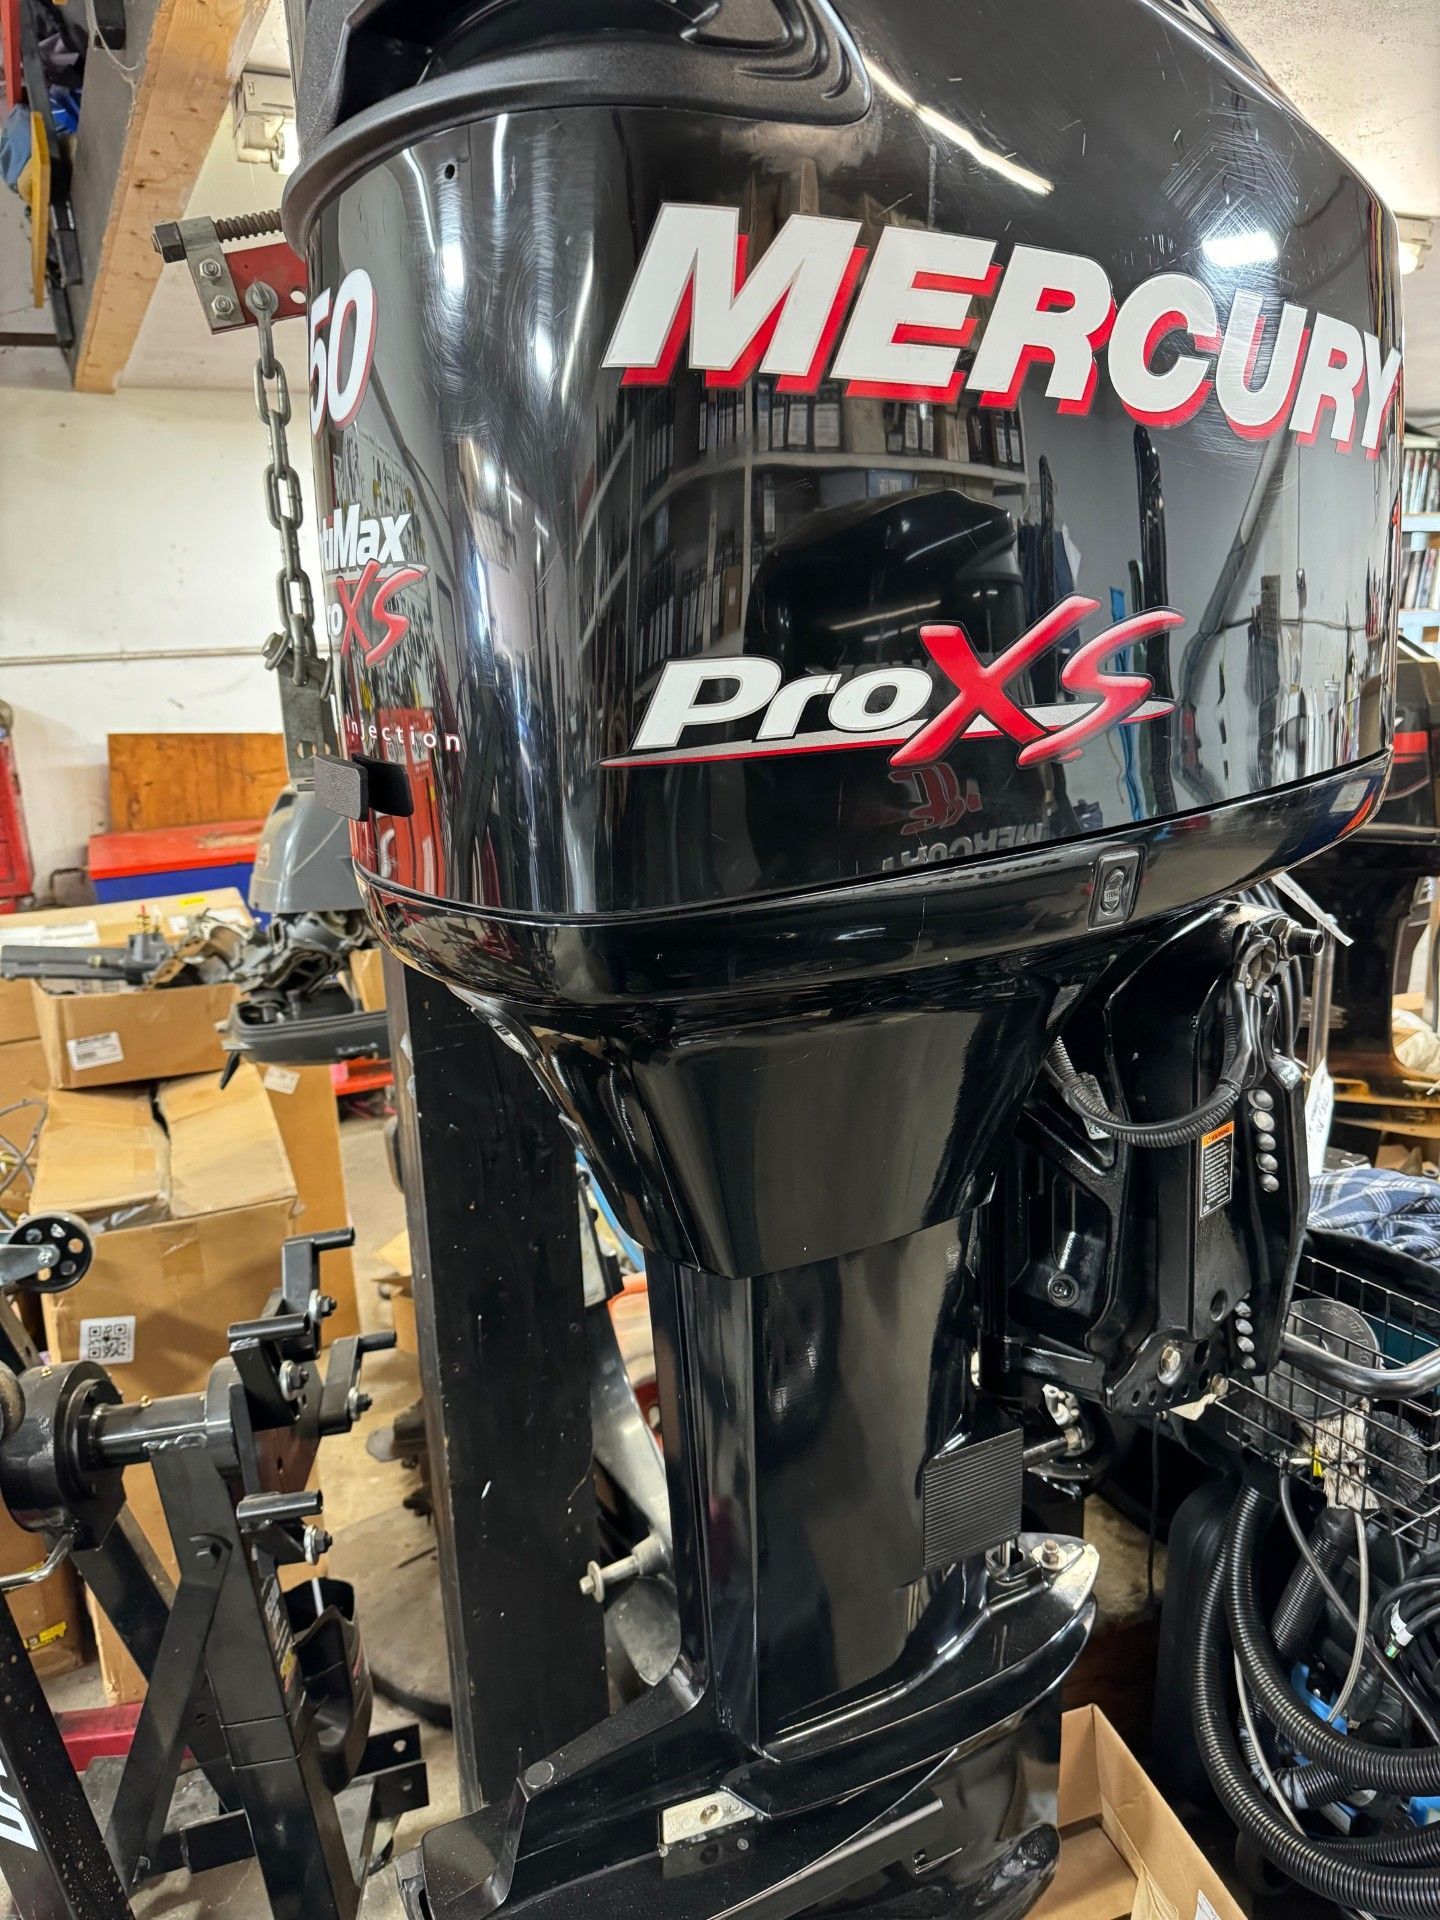 A mercury outboard motor is sitting in a garage.